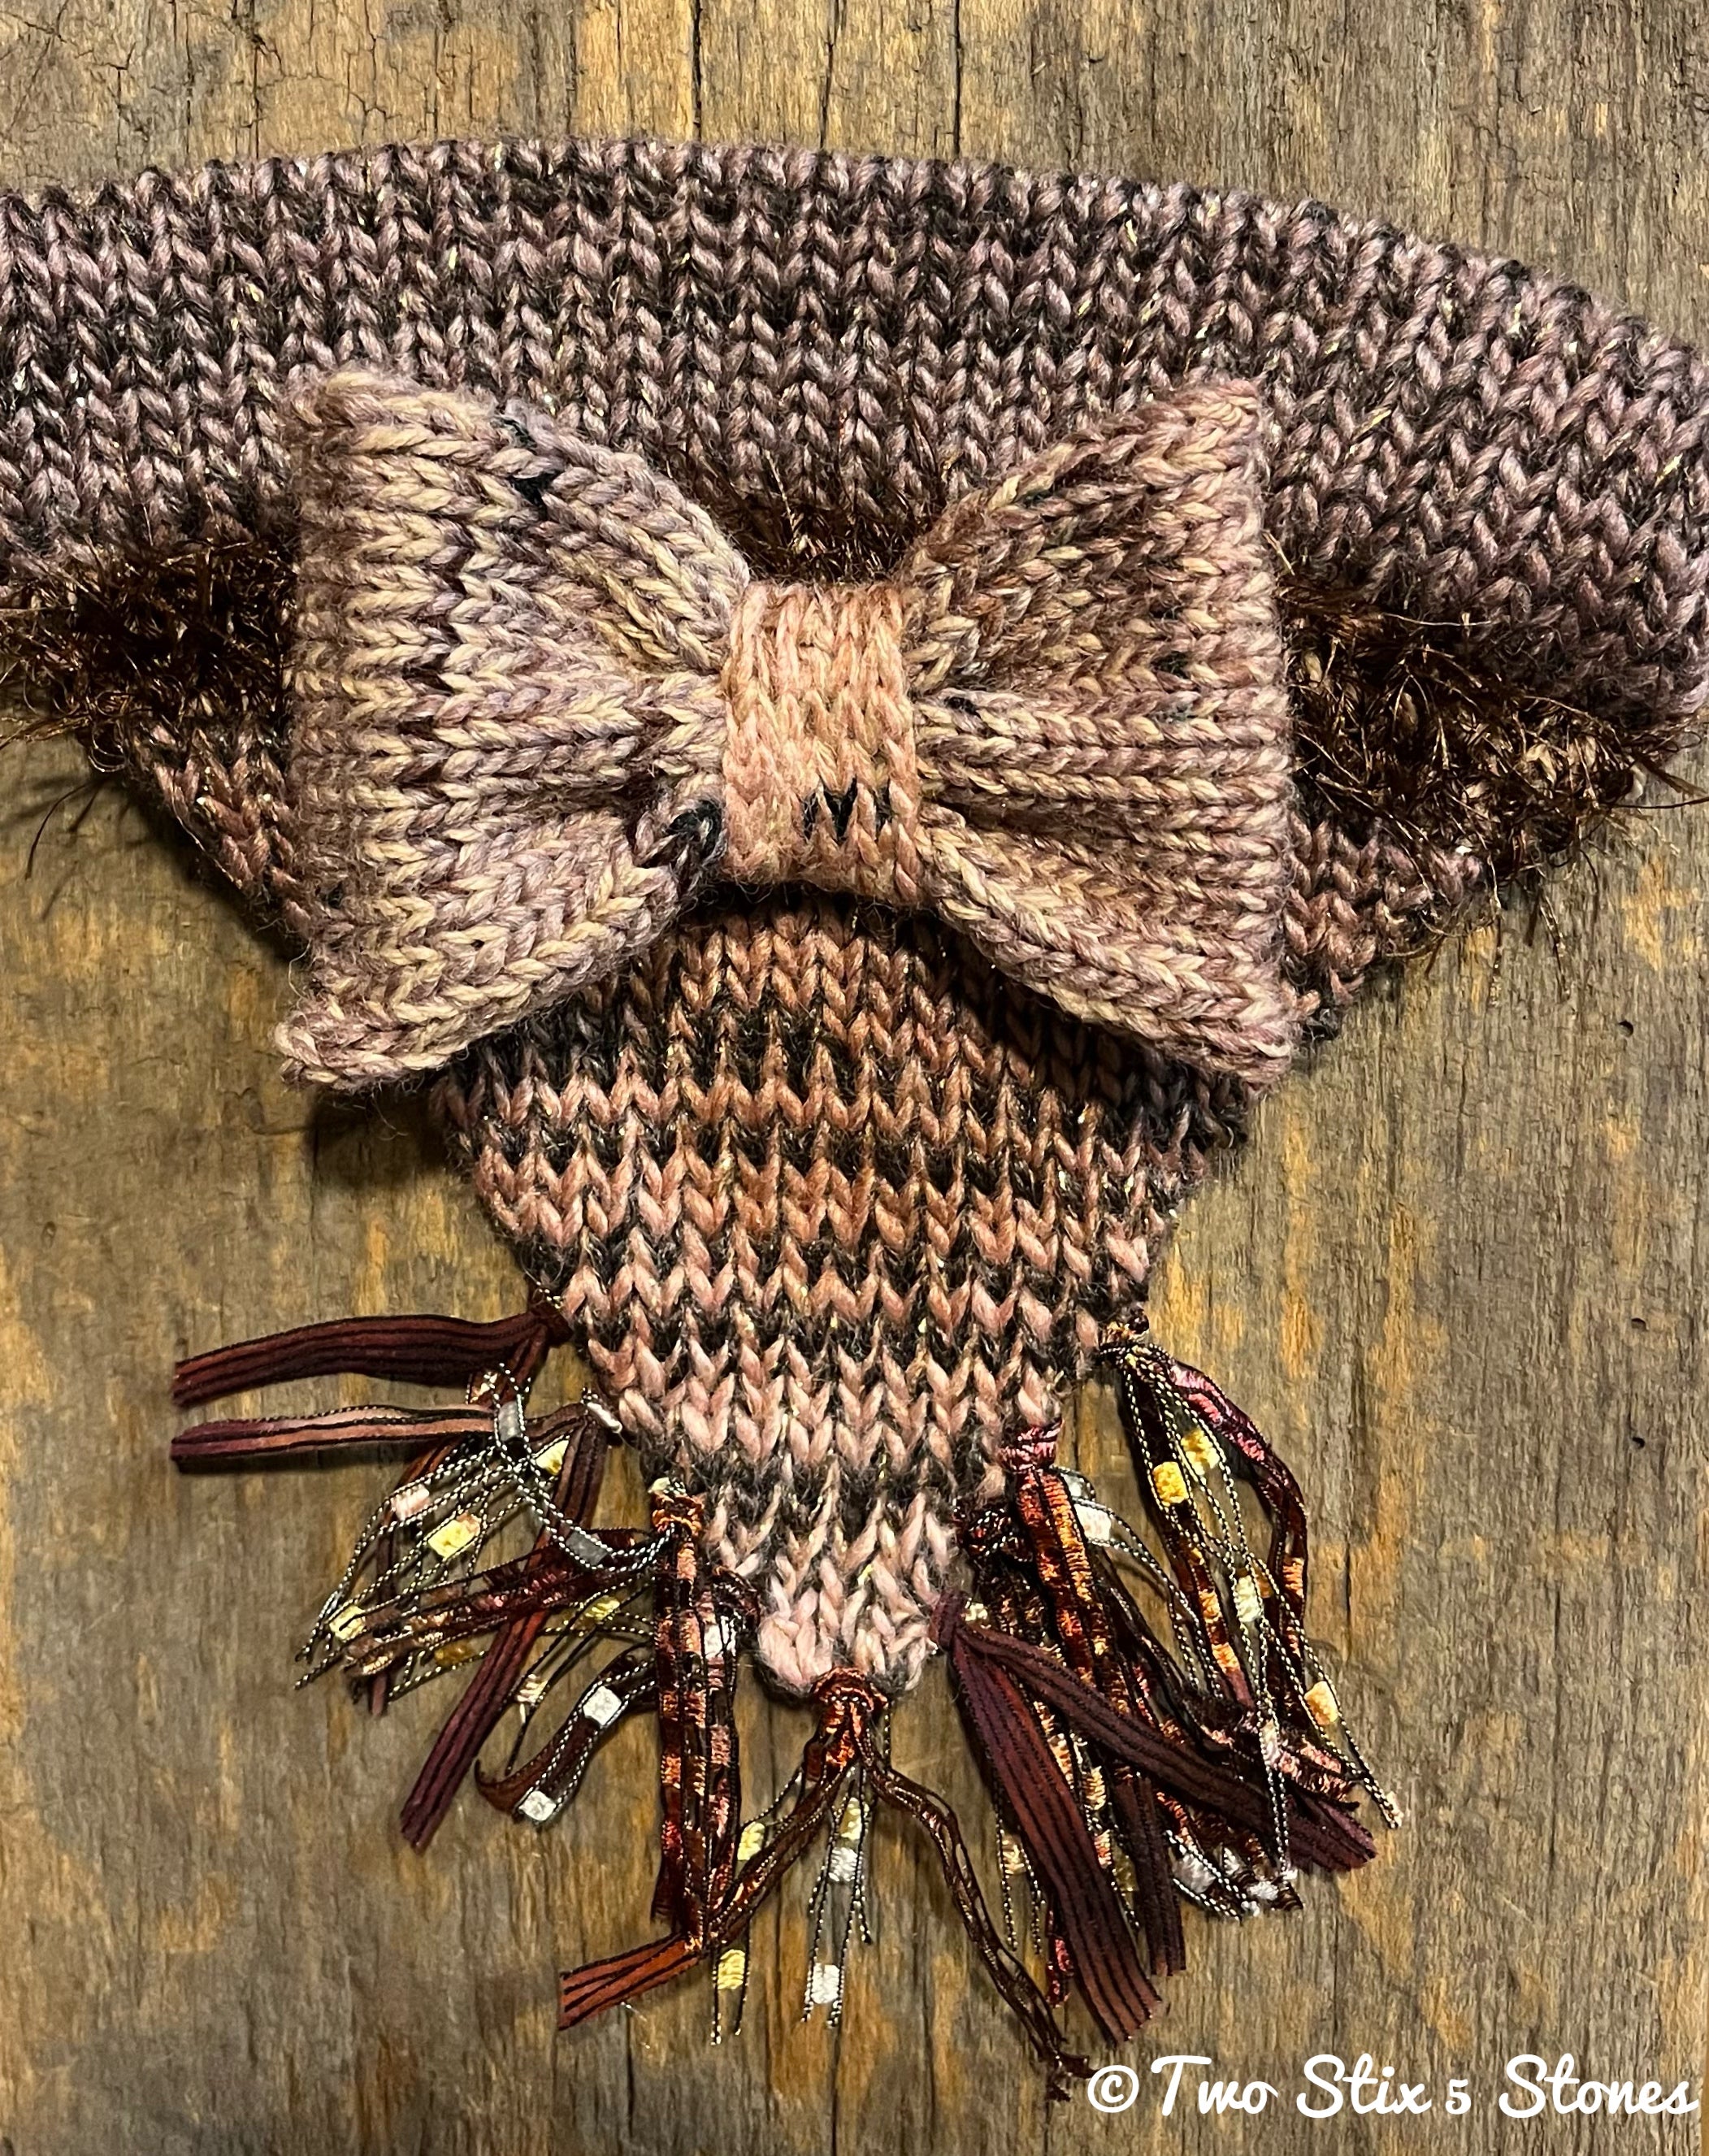 M/L - Pet Tweed Knit Bandana